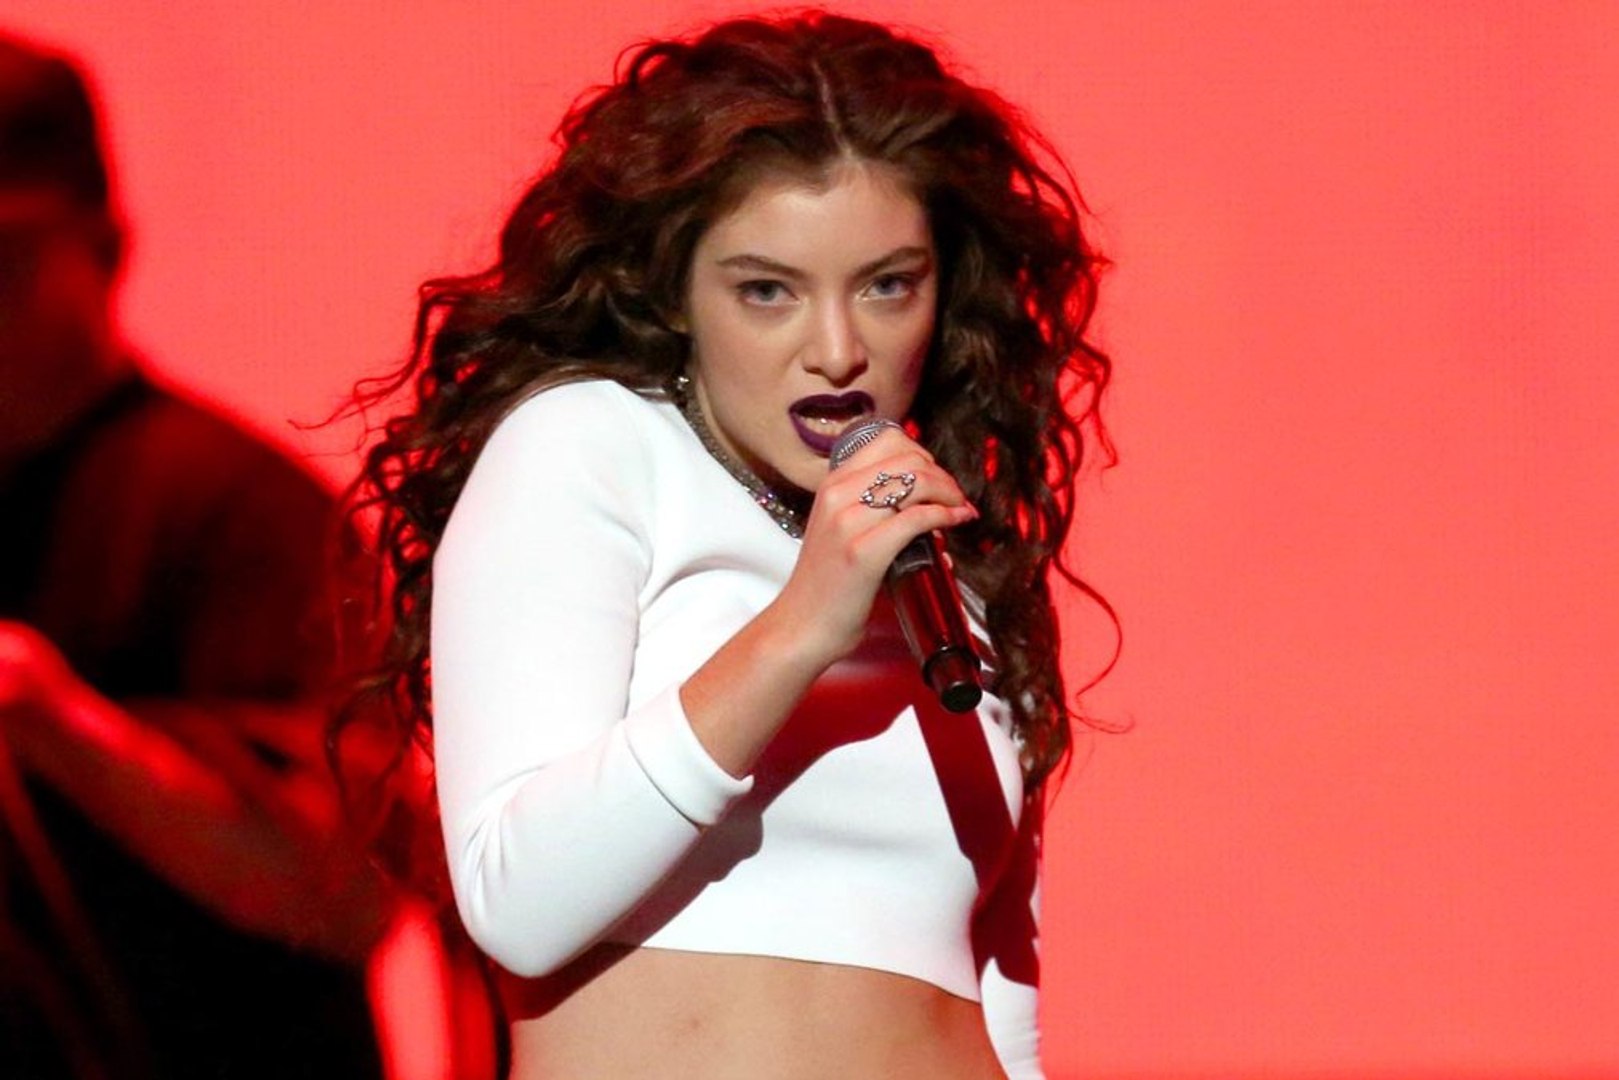 Lorde - Yellow Flicker Beat (2014 American Music Awards) - video Dailymotion